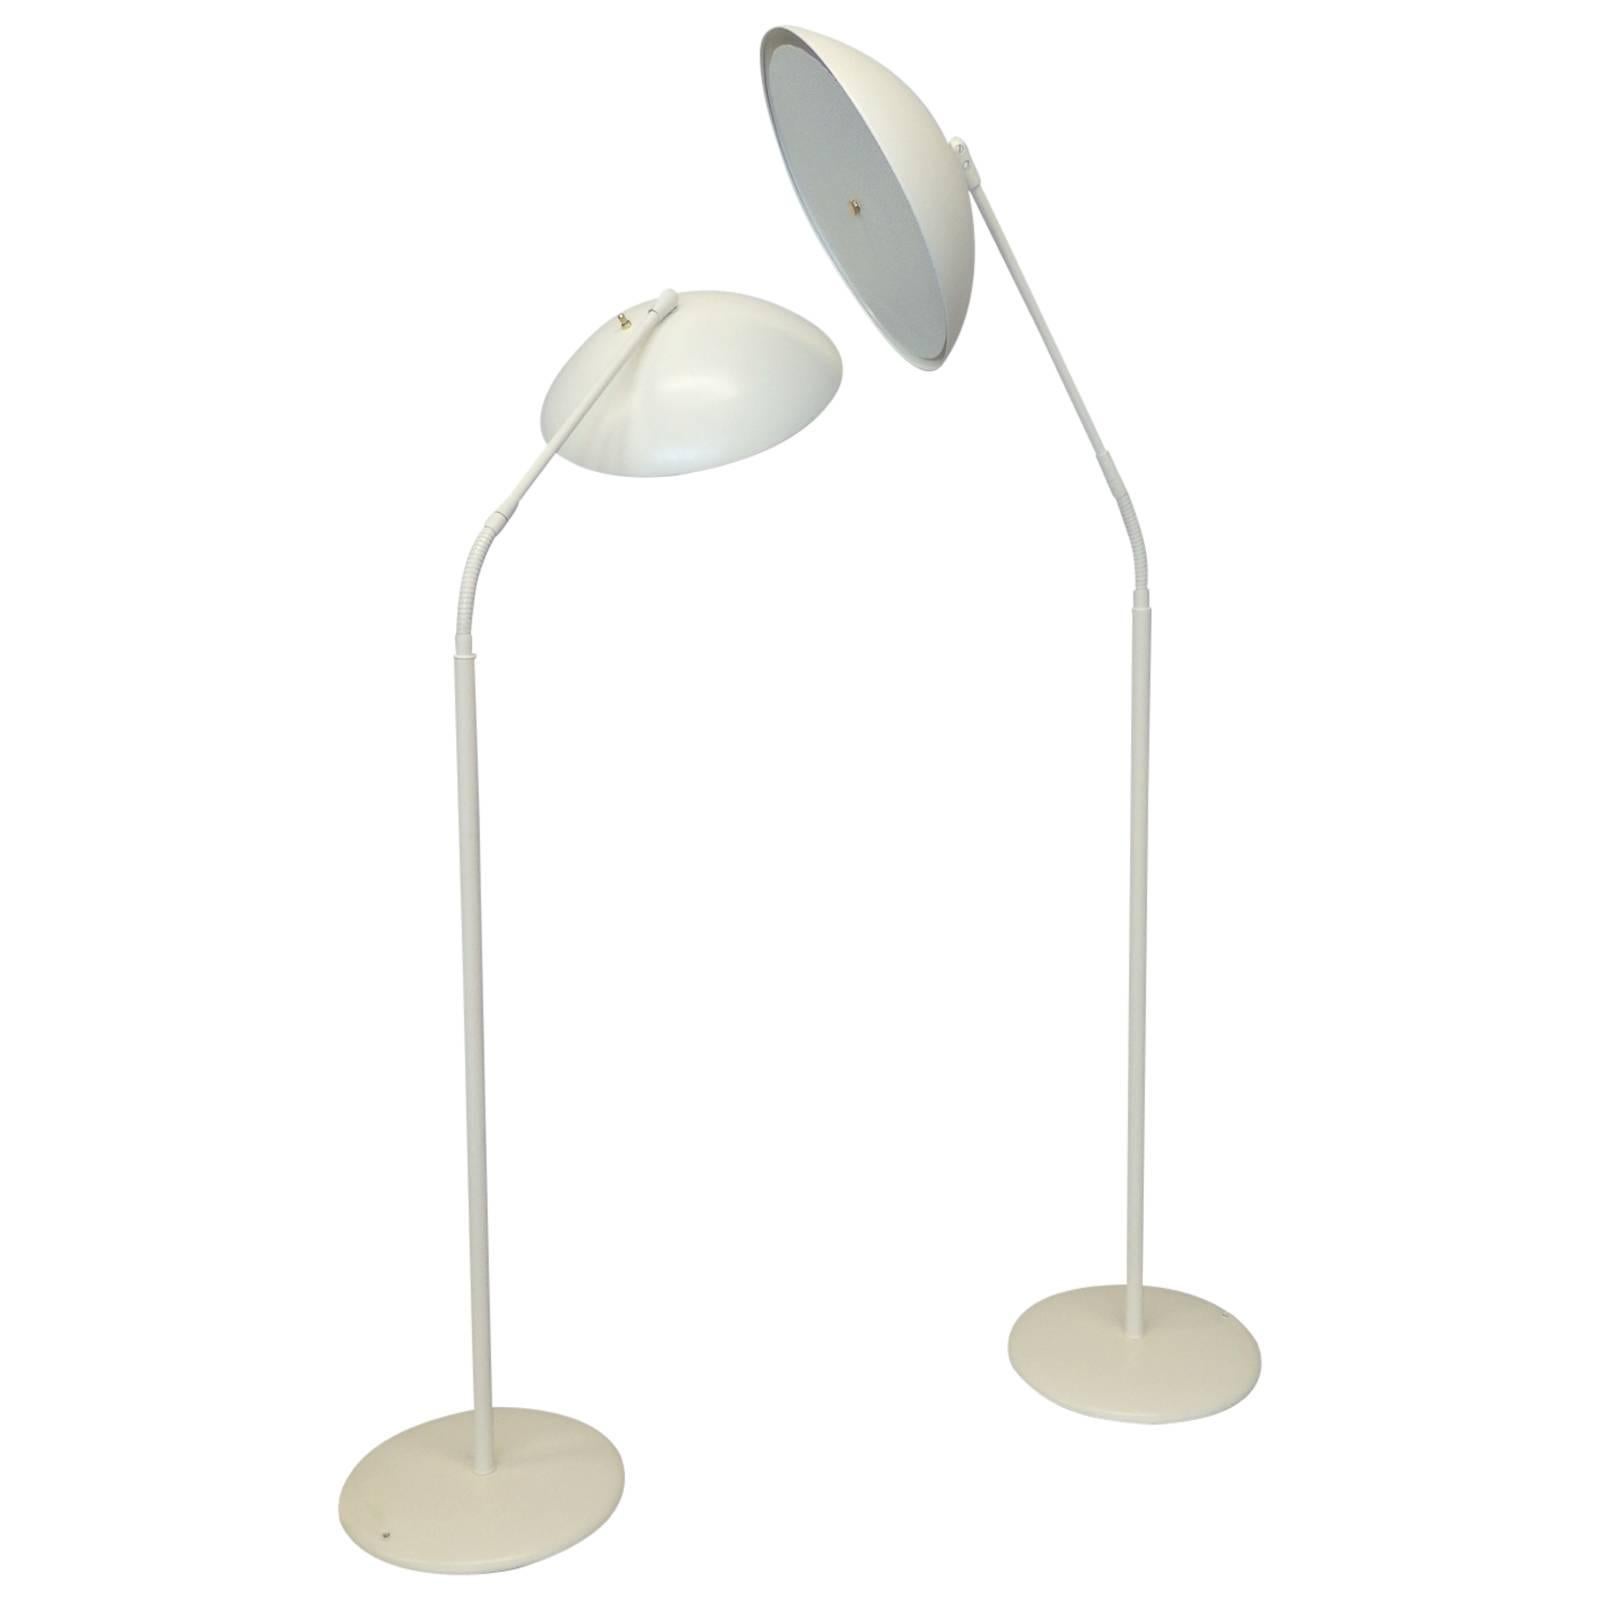 Pair of Gerald Thurston for Lightolier adjustable flexible Floor Lamps